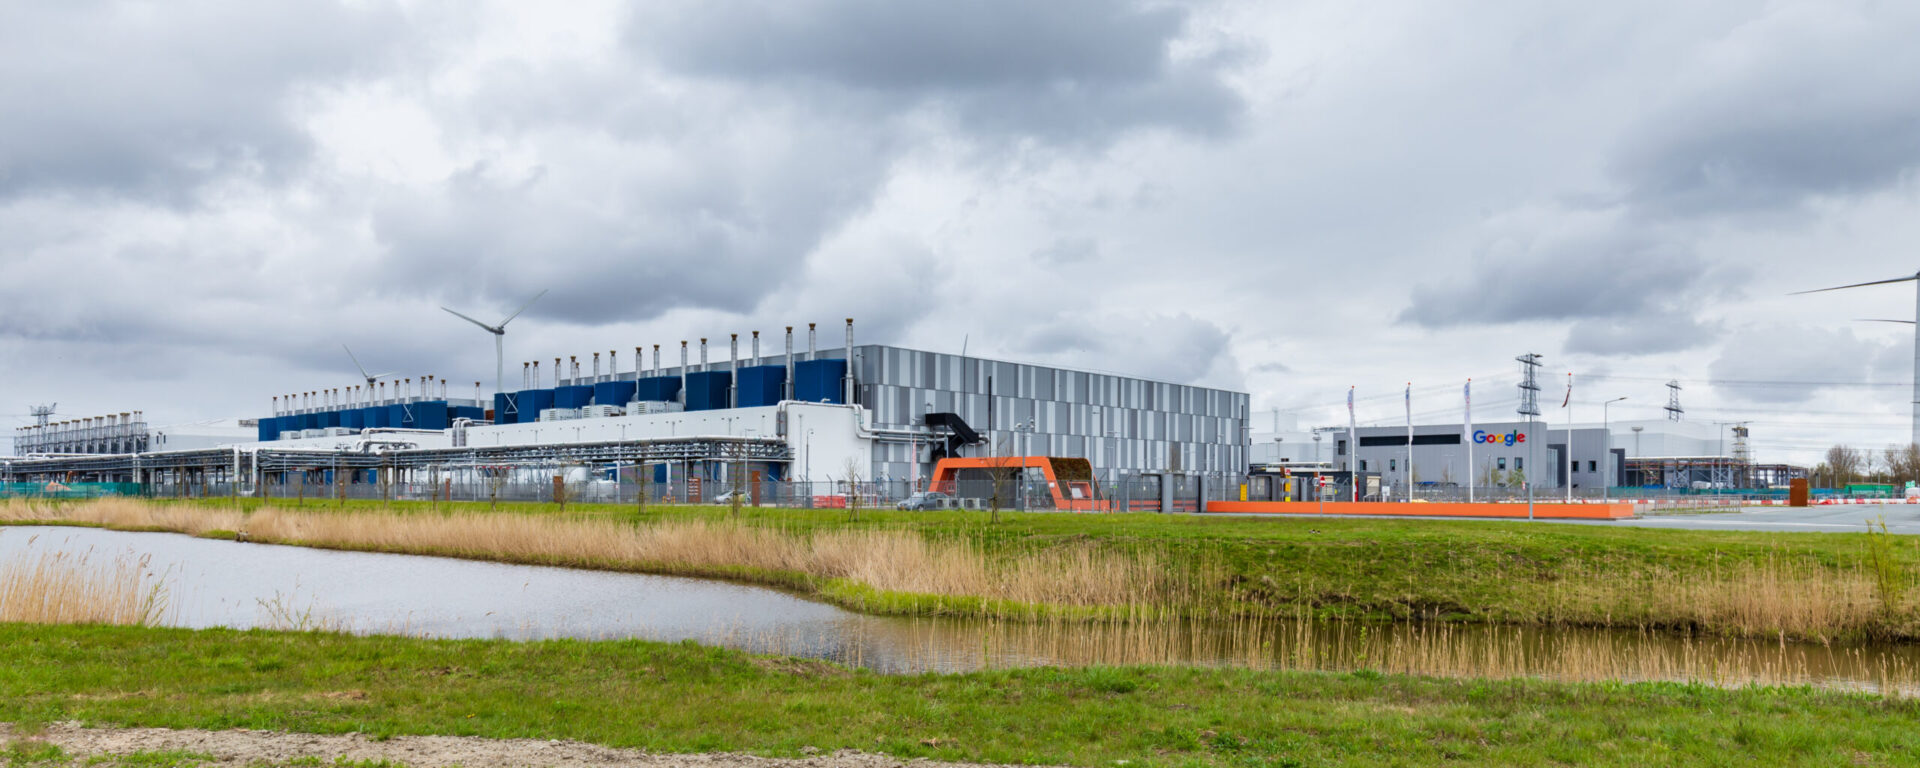 Google Datacenter in Eemshaven in the Netherlands